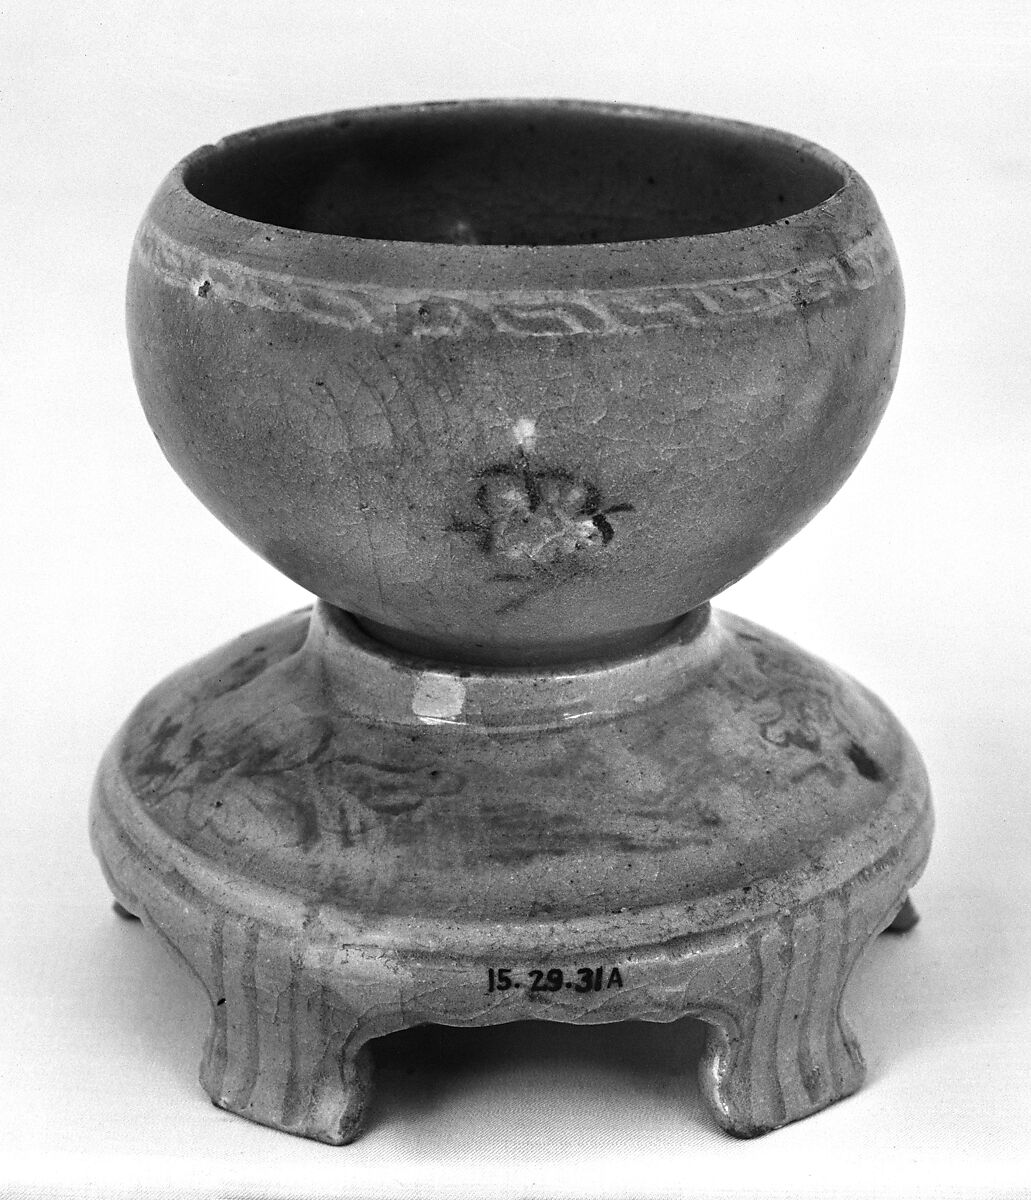 Vase with Stand, Stoneware with inlaid decoration under celadon glaze, Korea 